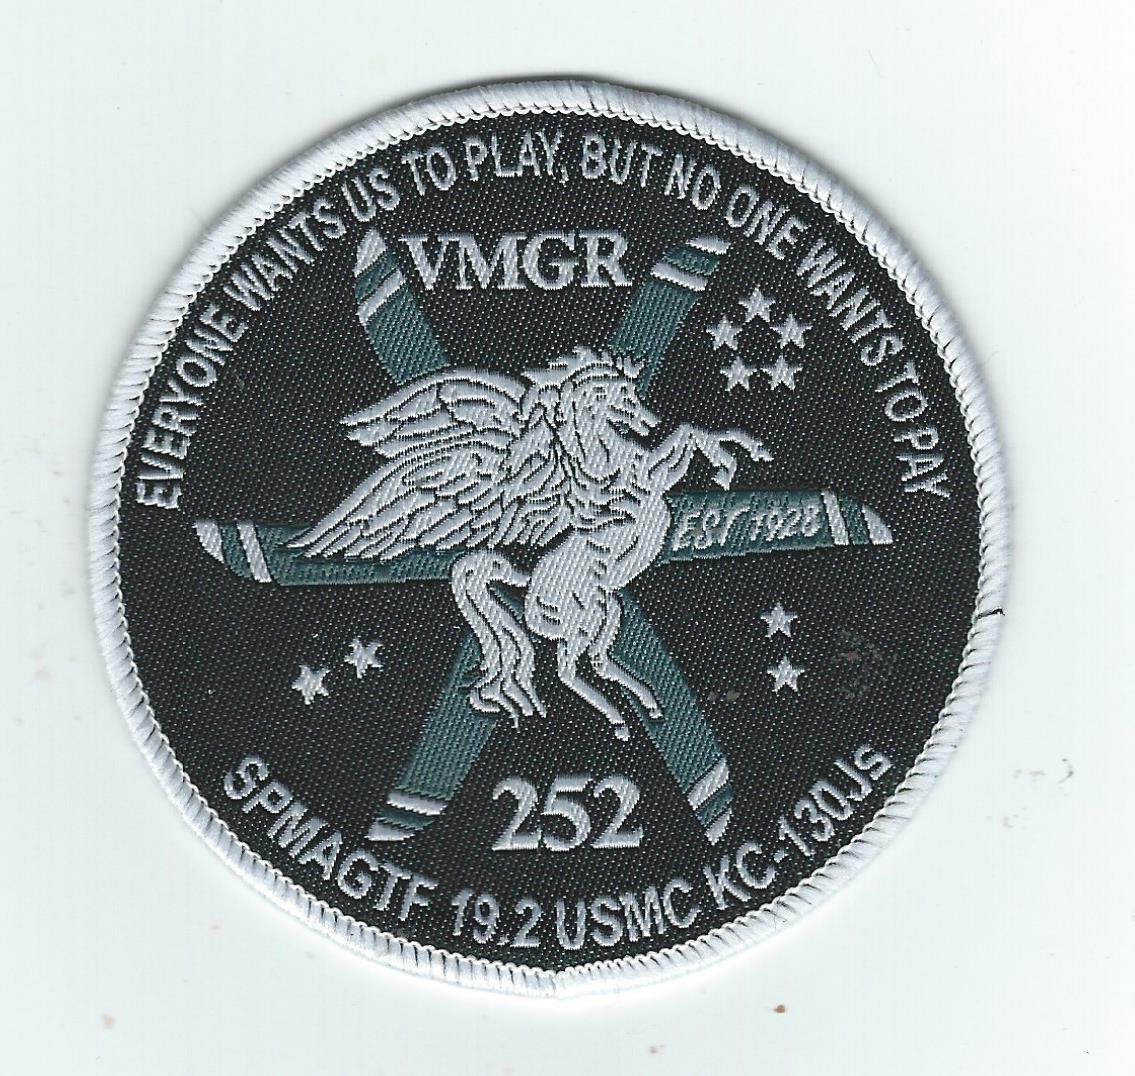 VMGR-252 SPMAGTF 19.2 (THEIR LATEST) patch